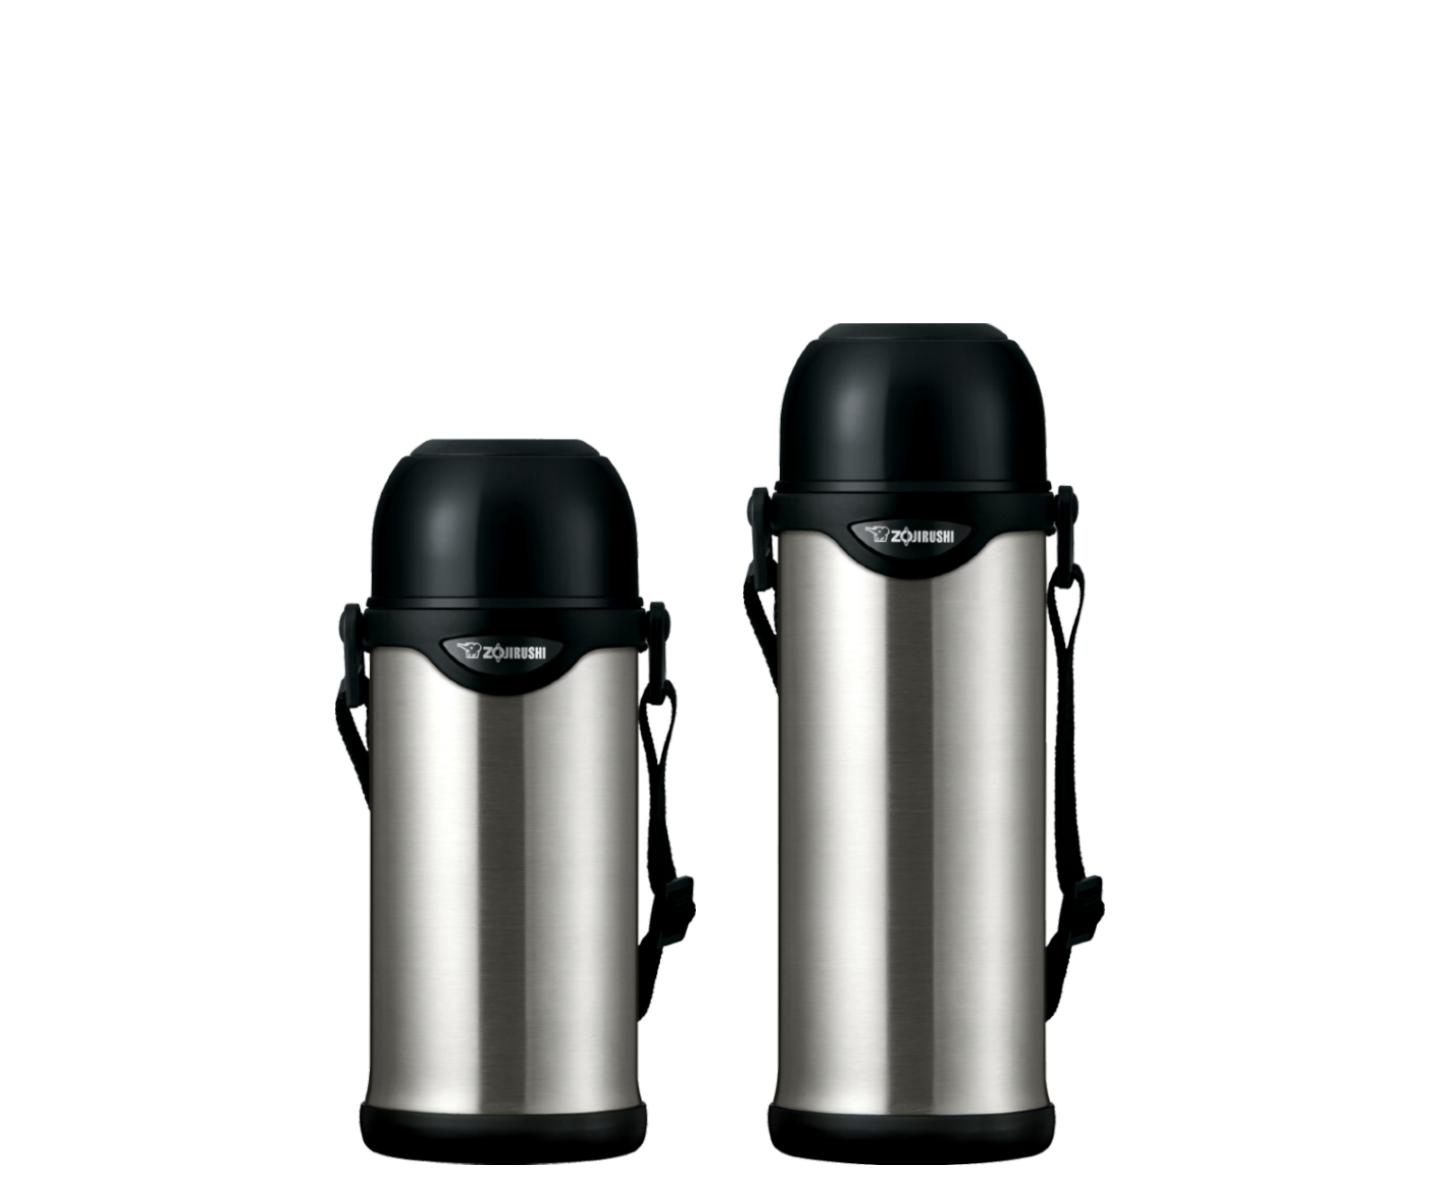 Zojirushi SJ-TG10-AA Water Bottle, Stainless Steel Bottle Cup Type, 3.3 Gal (1.0 L), Stainless Steel